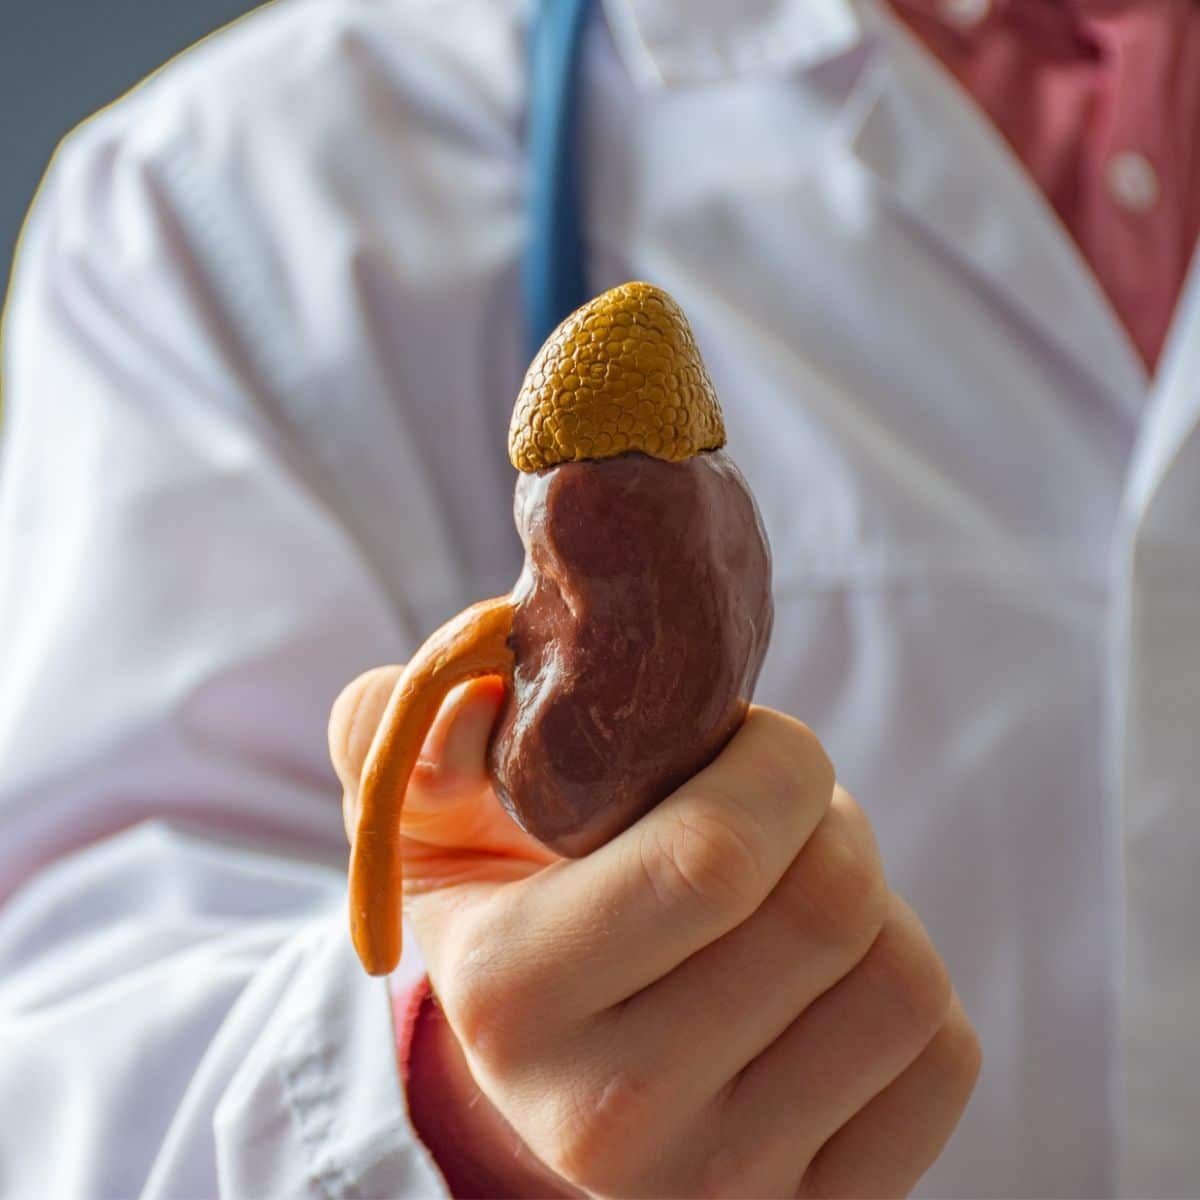 Doctor holding anatomical model of kidney.